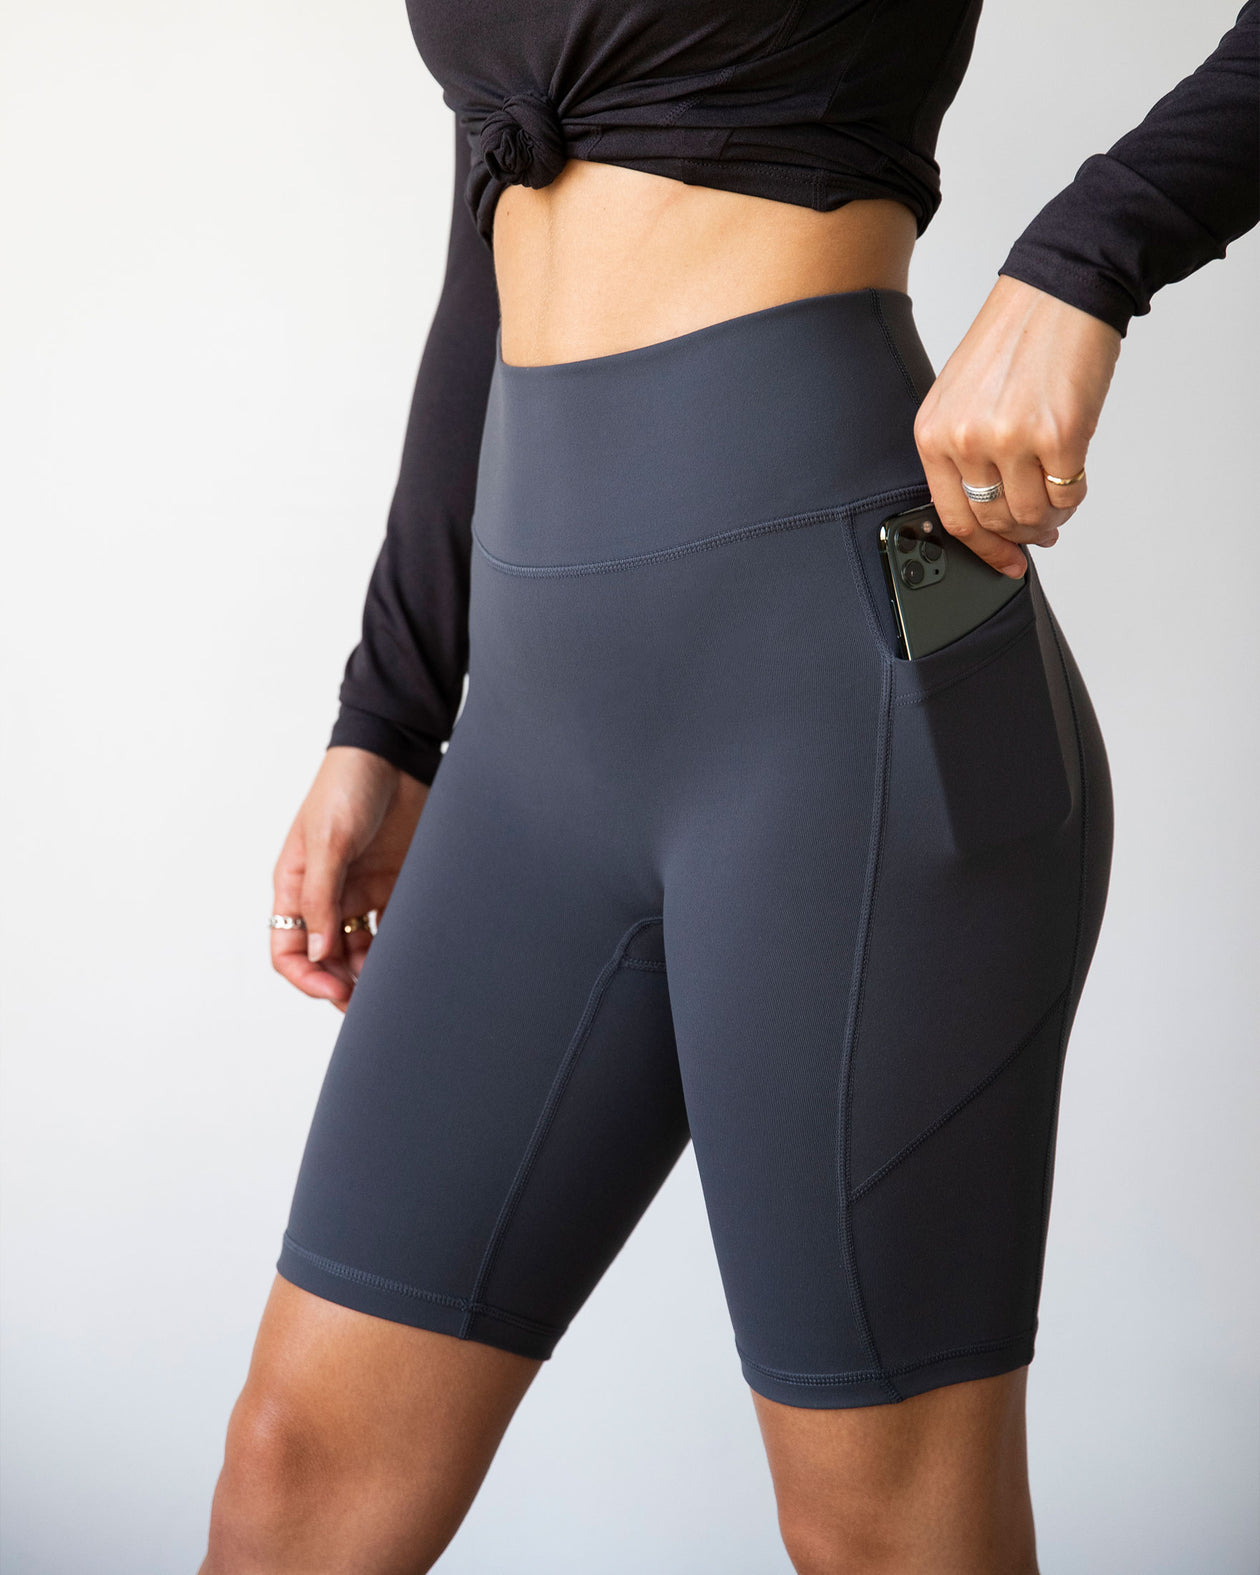 Fabletics Pockets Bike Shorts for Women